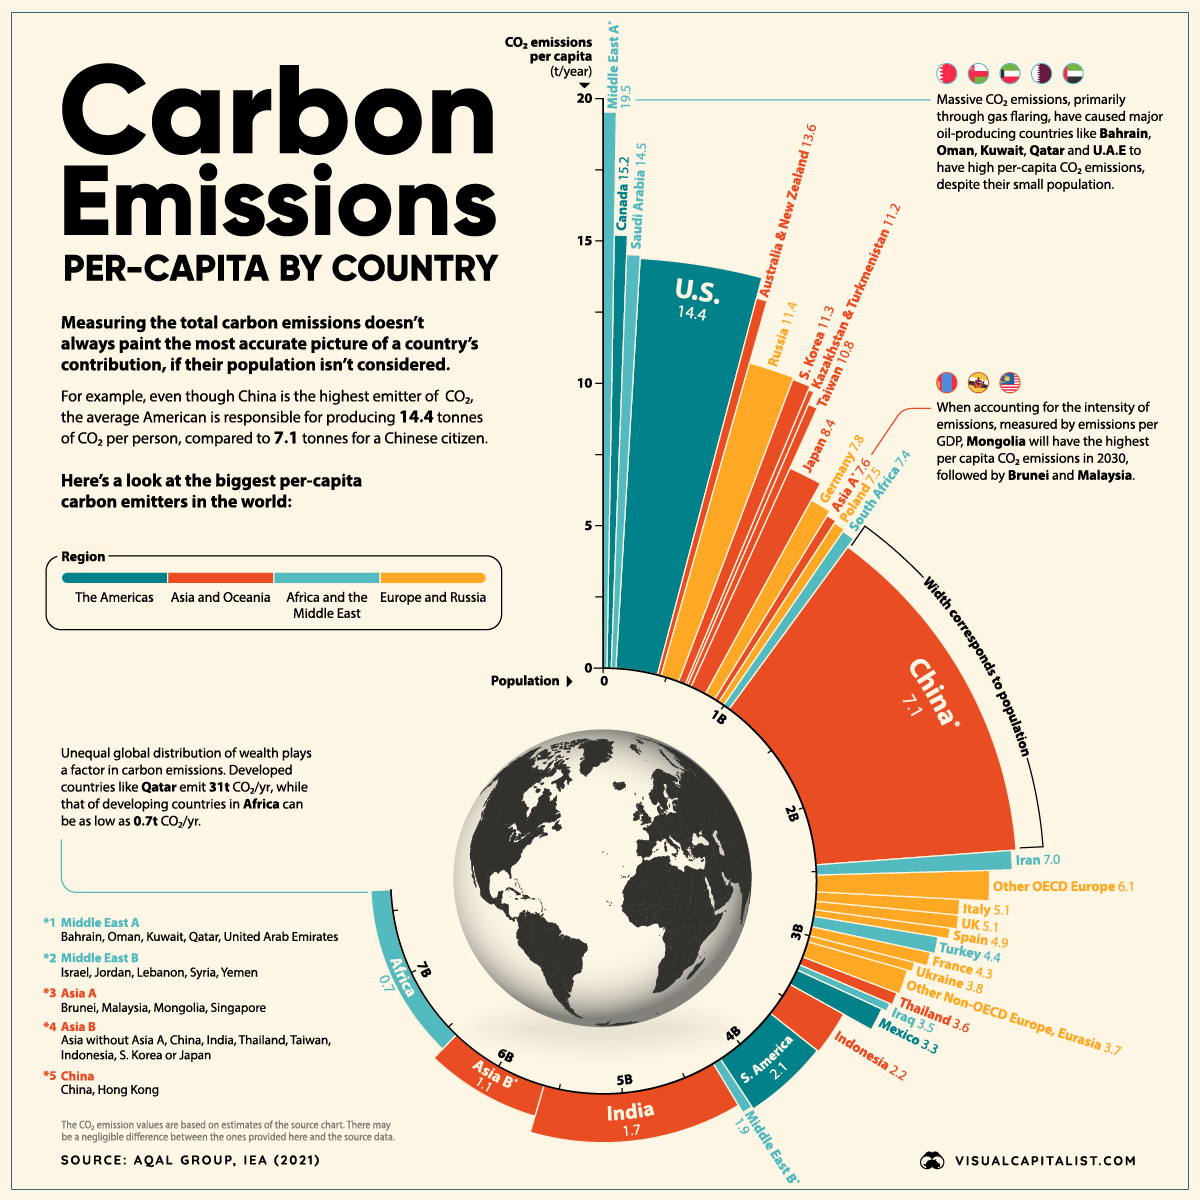 G20 GHG emissions per sector